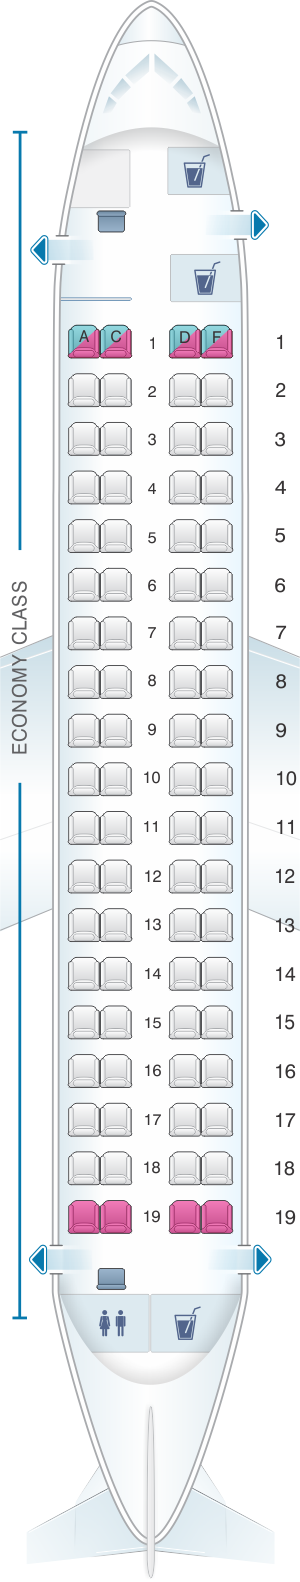 Seat map for Finnair Embraer EMB 170